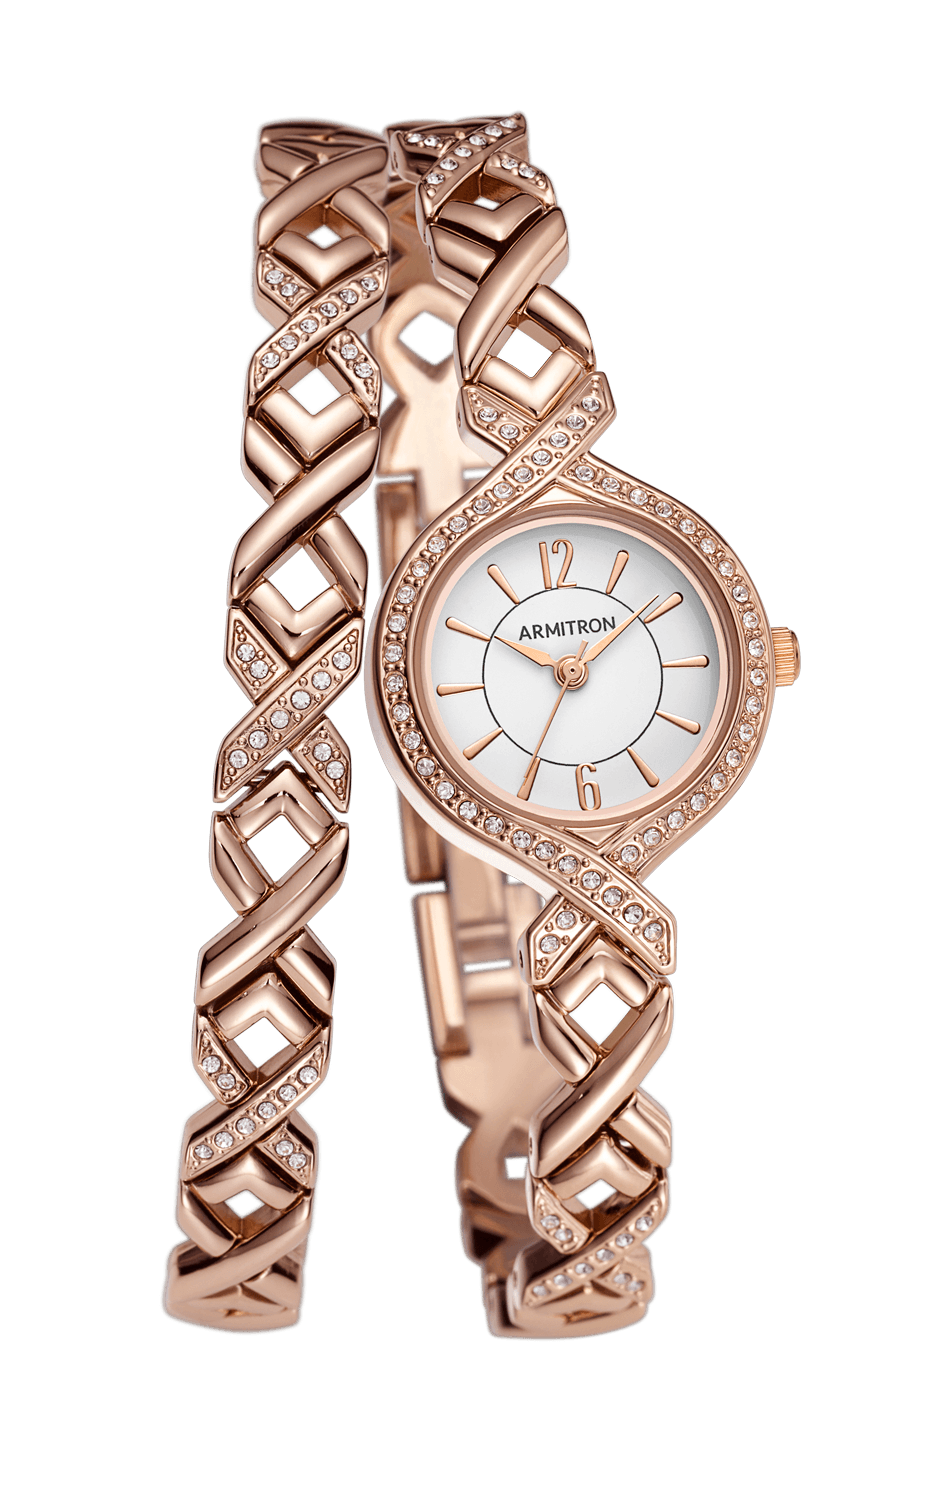 Armitron Women’s Swarovski Crystal-Accented Watch and Bracelet Set